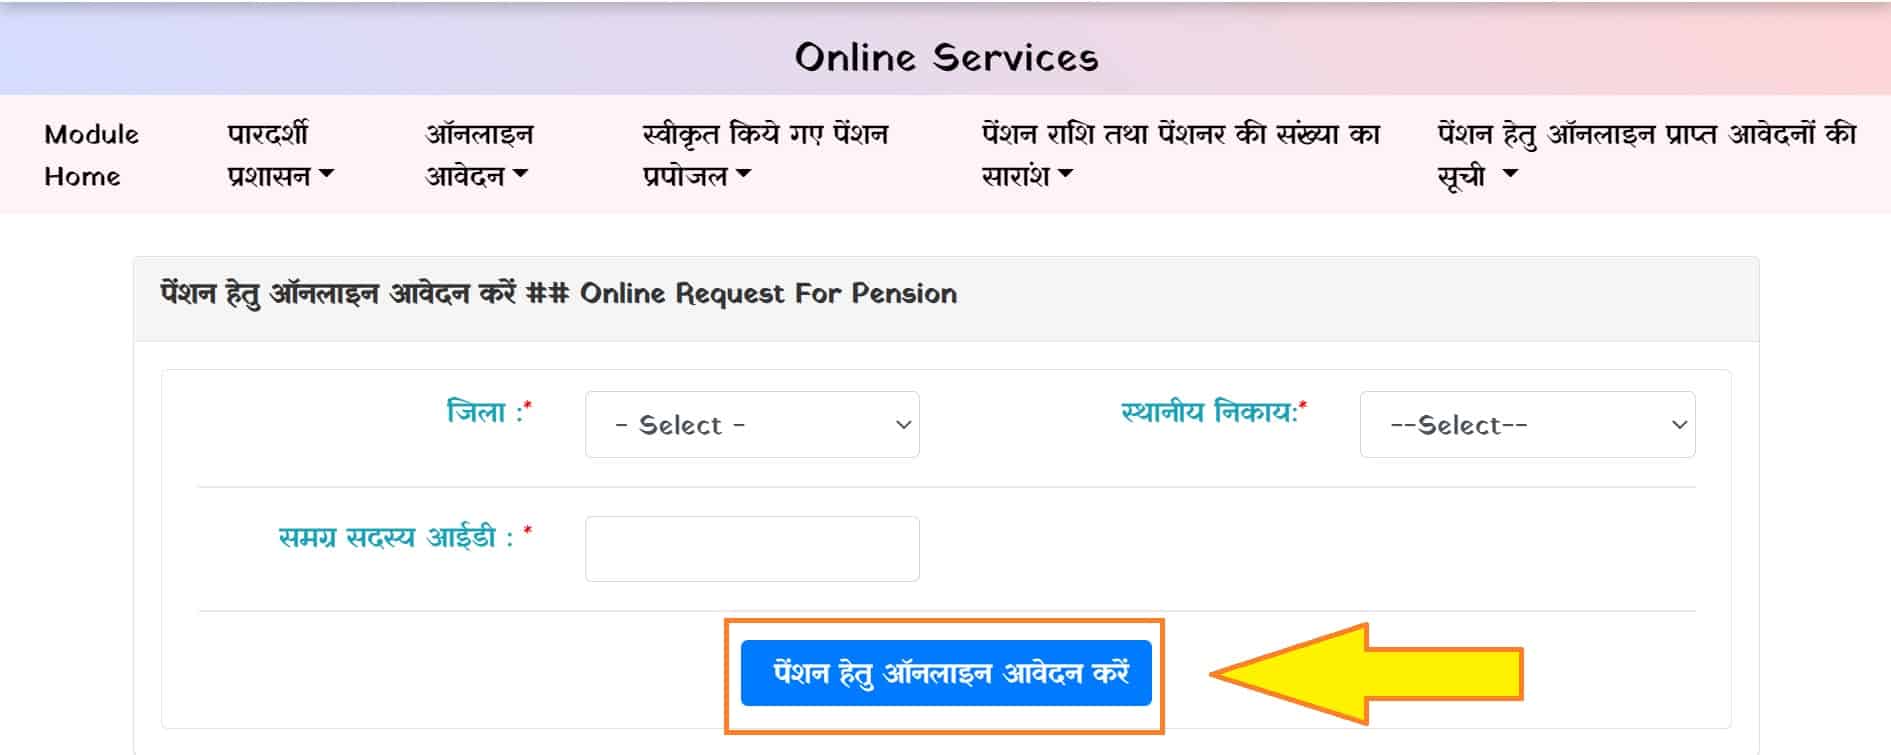 ऑनलाइन आवेदन वृद्धा पेंशन Madhya Pradesh Vridha Pension Yojna. aise kare avedanयोजना 